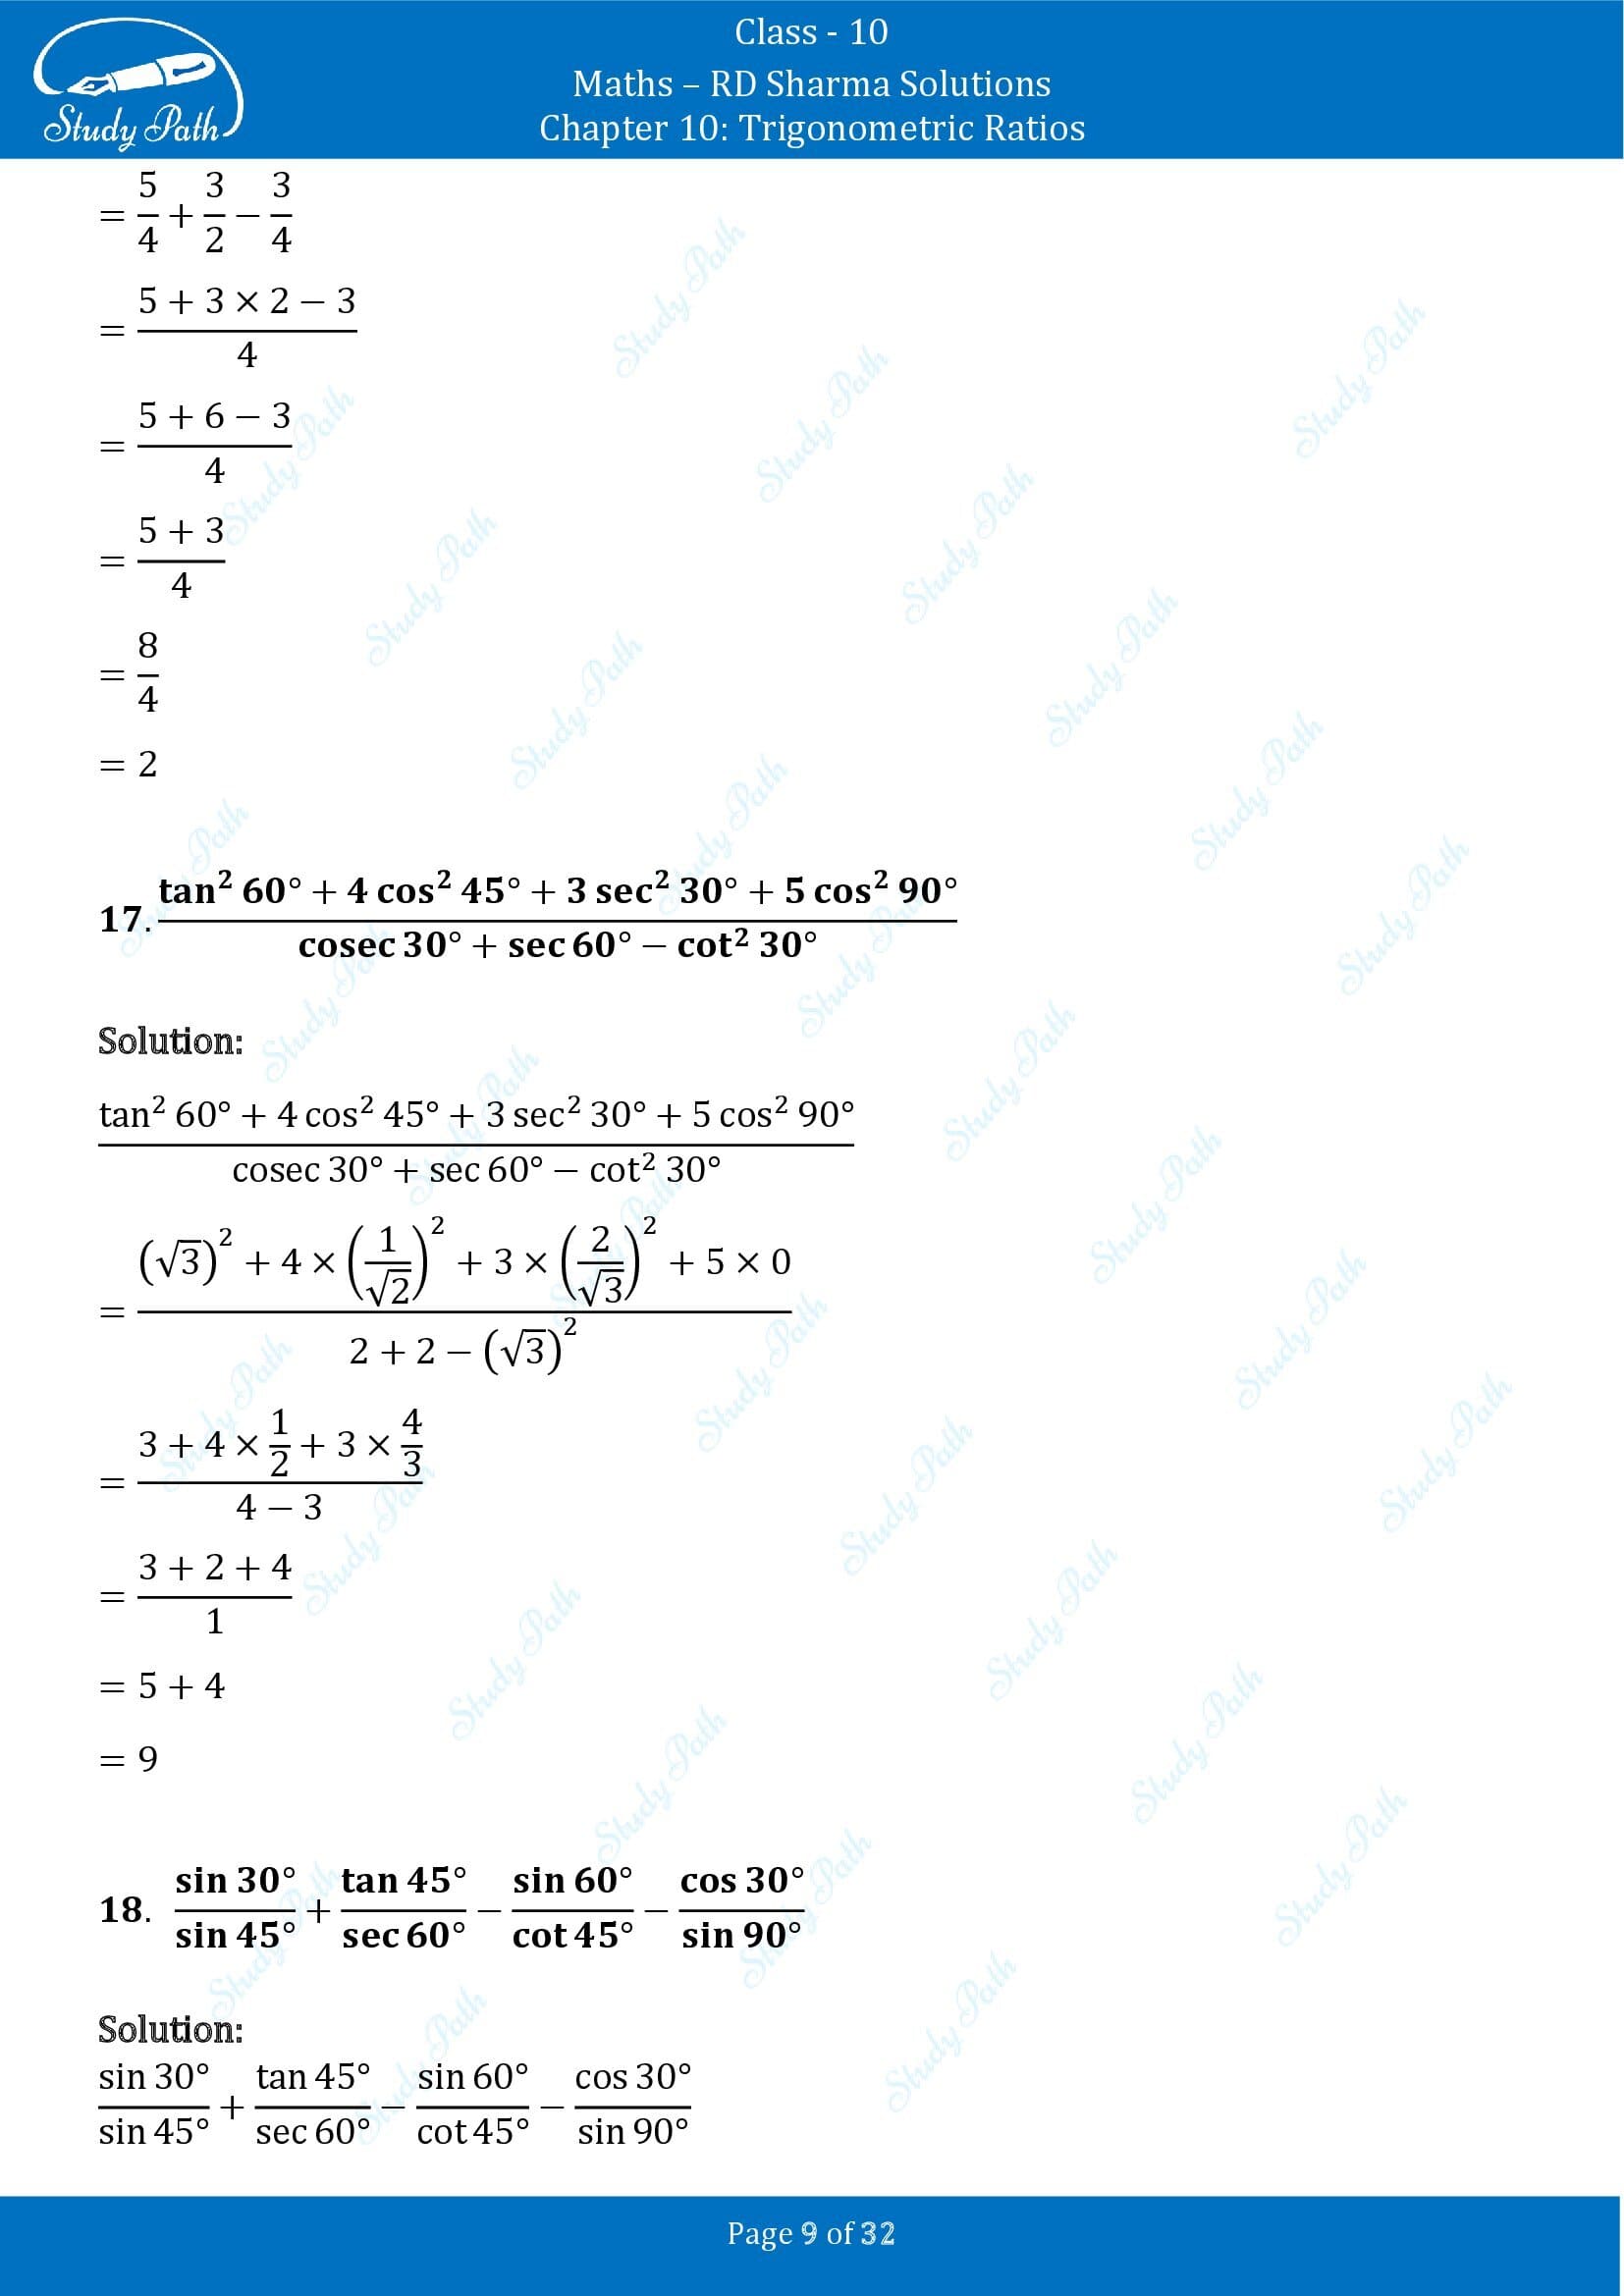 RD Sharma Solutions Class 10 Chapter 10 Trigonometric Ratios Exercise 10.2 00009